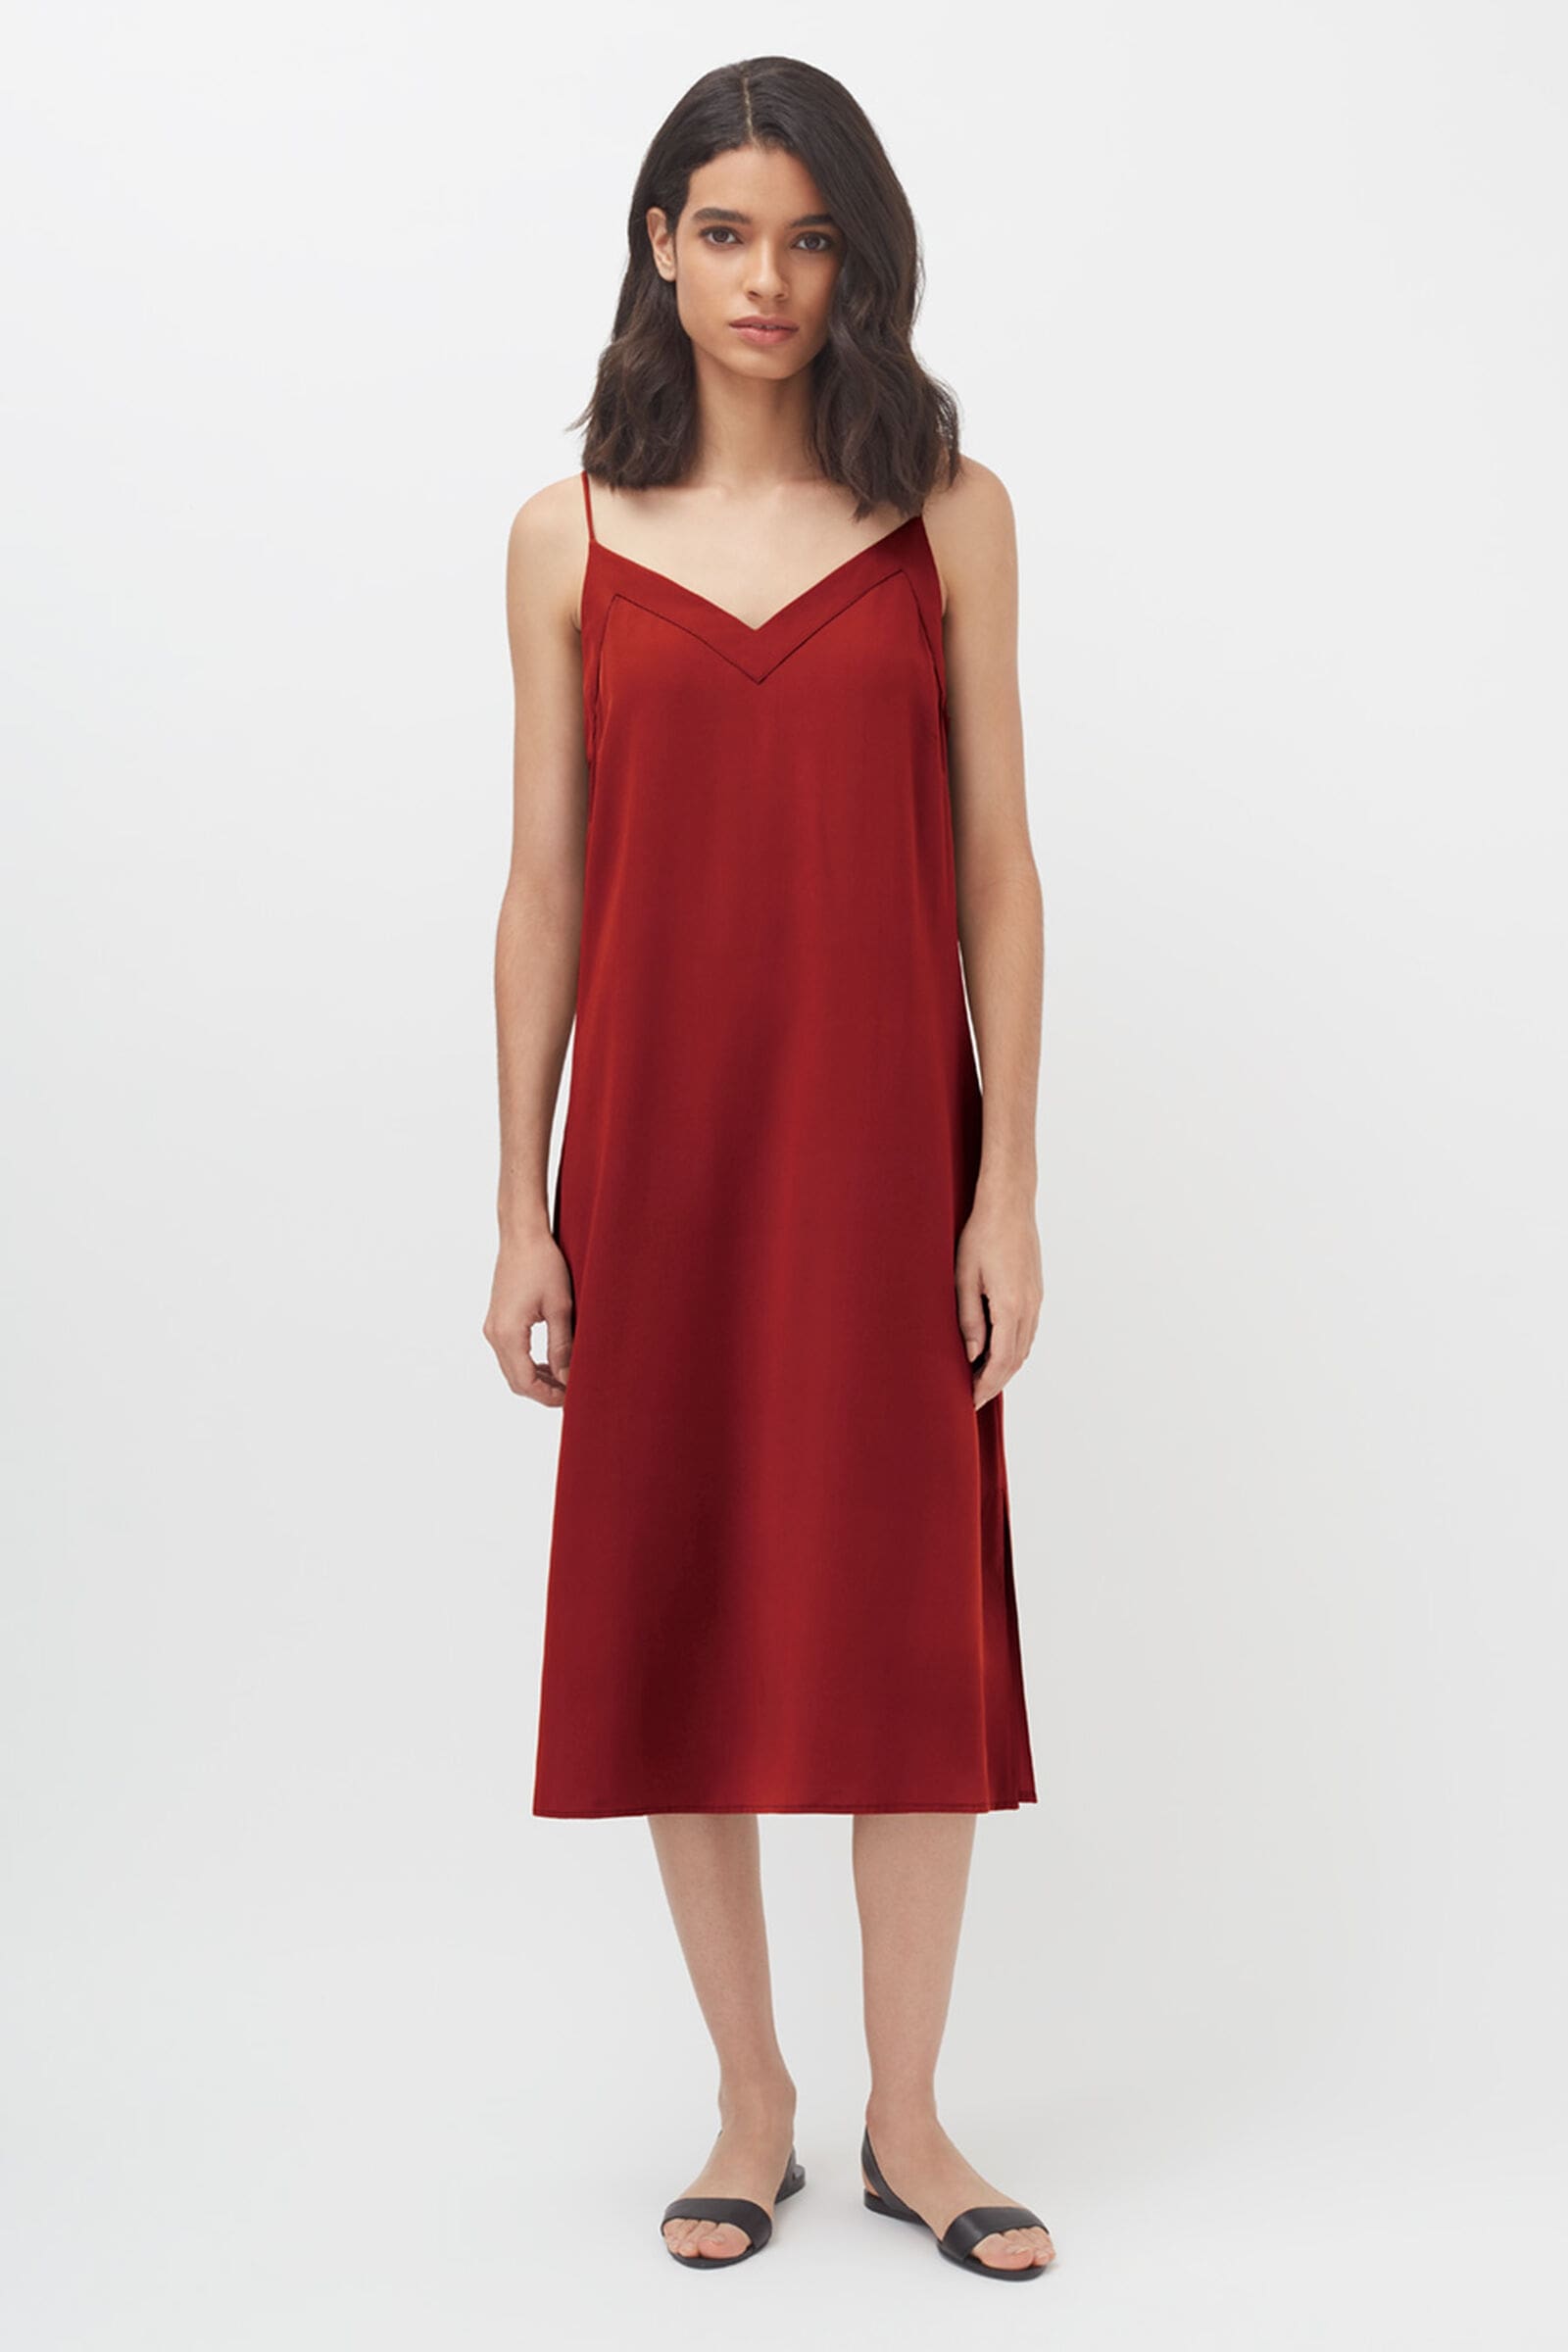 A model wears a red spaghetti strap slip dress.